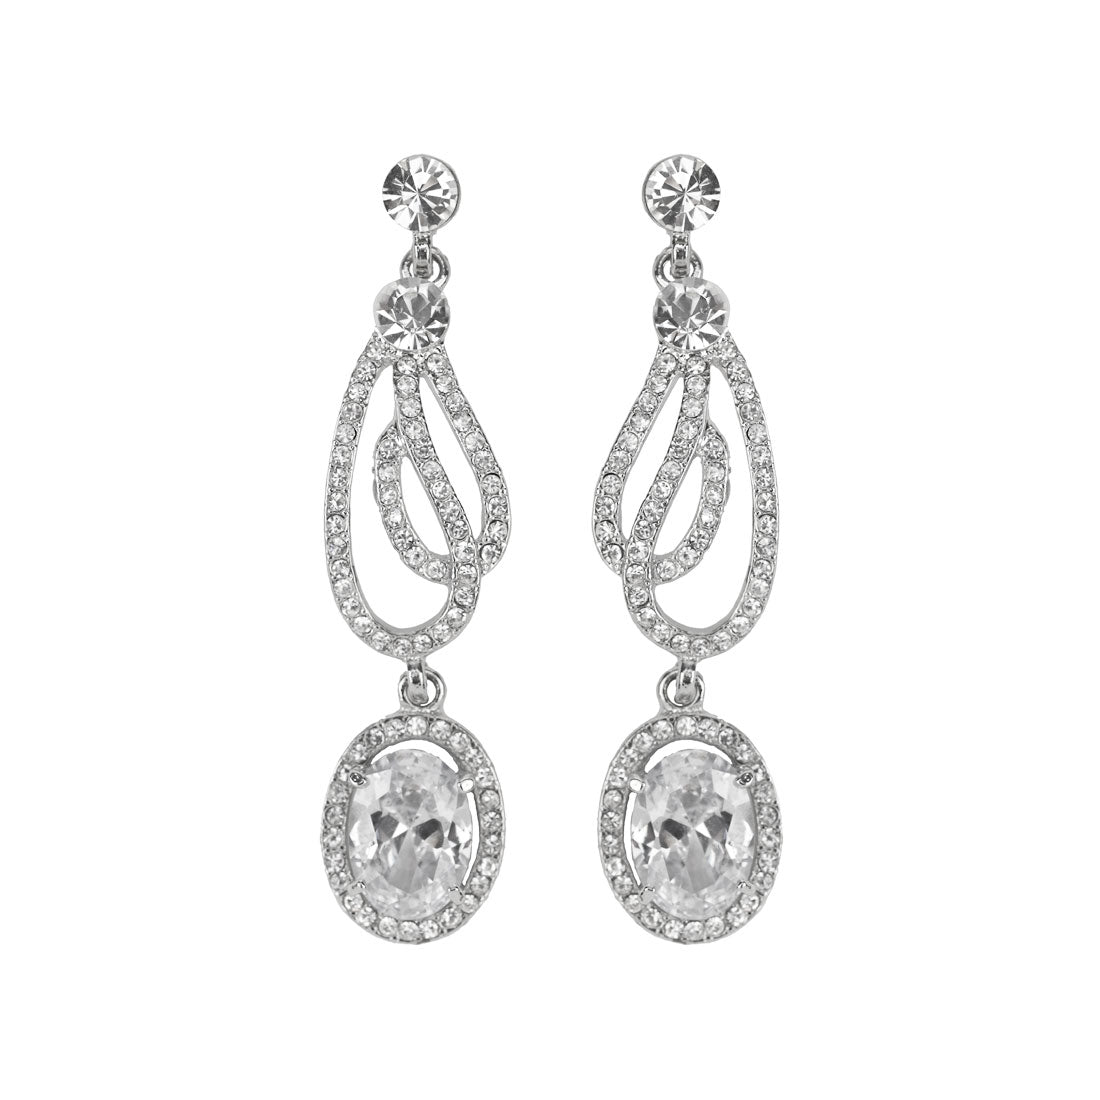 Forties Darling 1940s Vintage Crystal Drop Earrings for Weddings & Special Occaions